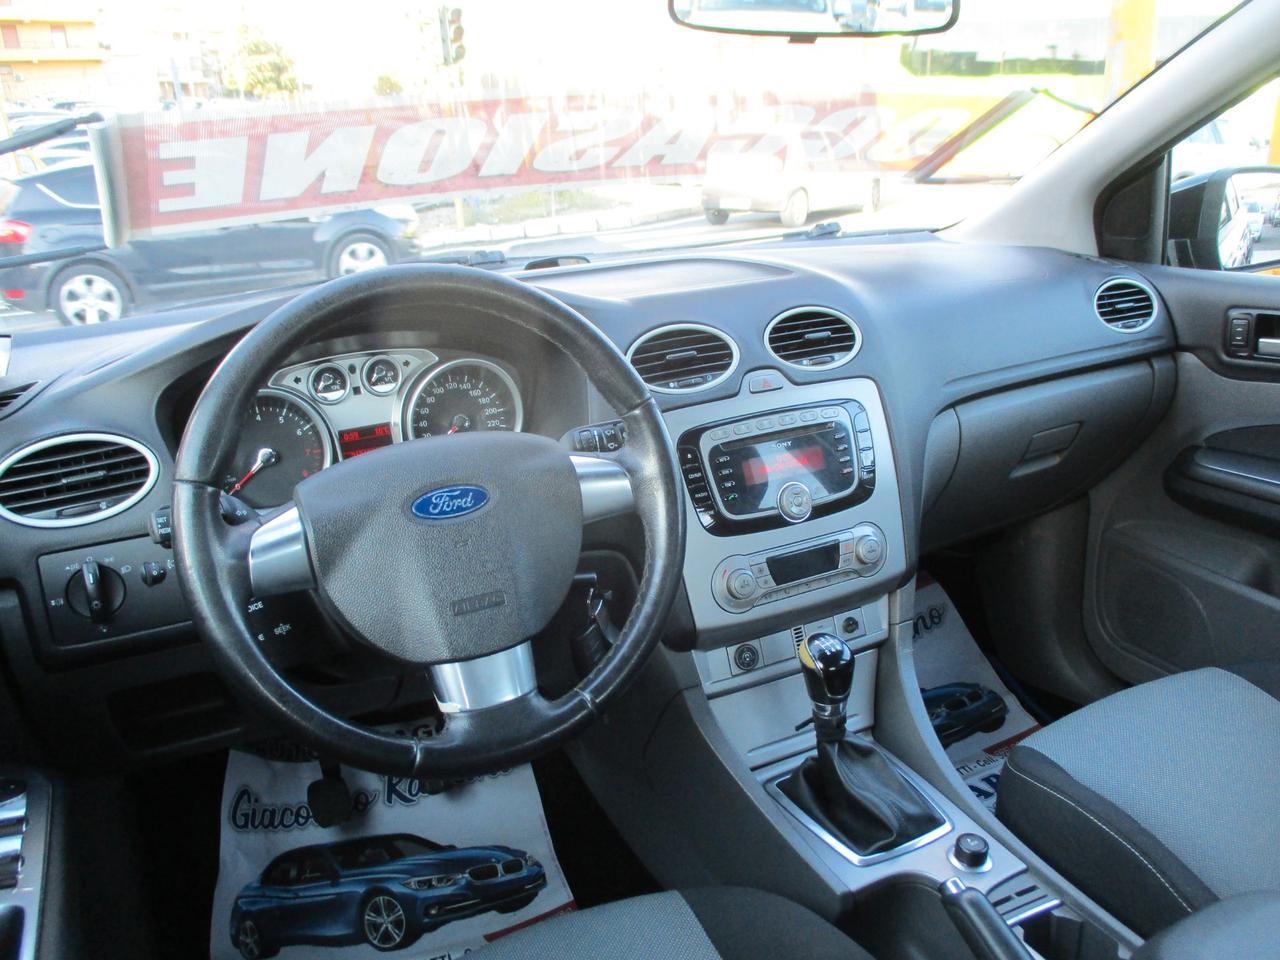 Ford Focus 1.6 (115CV) 5p. Bz.- GPL 2010